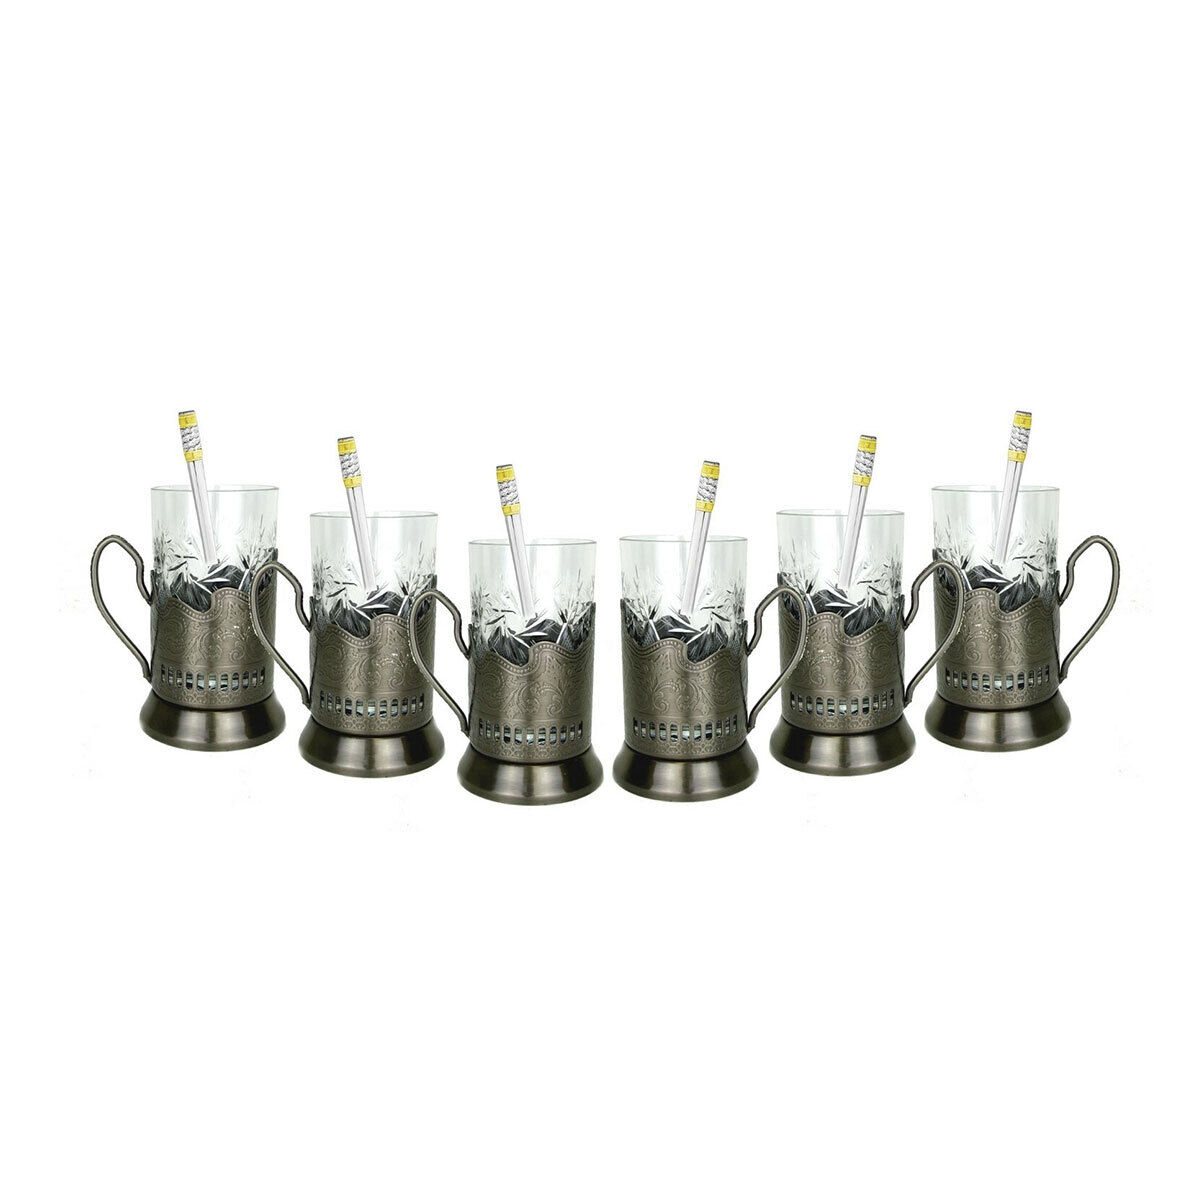 18-pc Set Russian Tea Glass Holders Podstakannik & Cut Crystal Glasses & Spoons